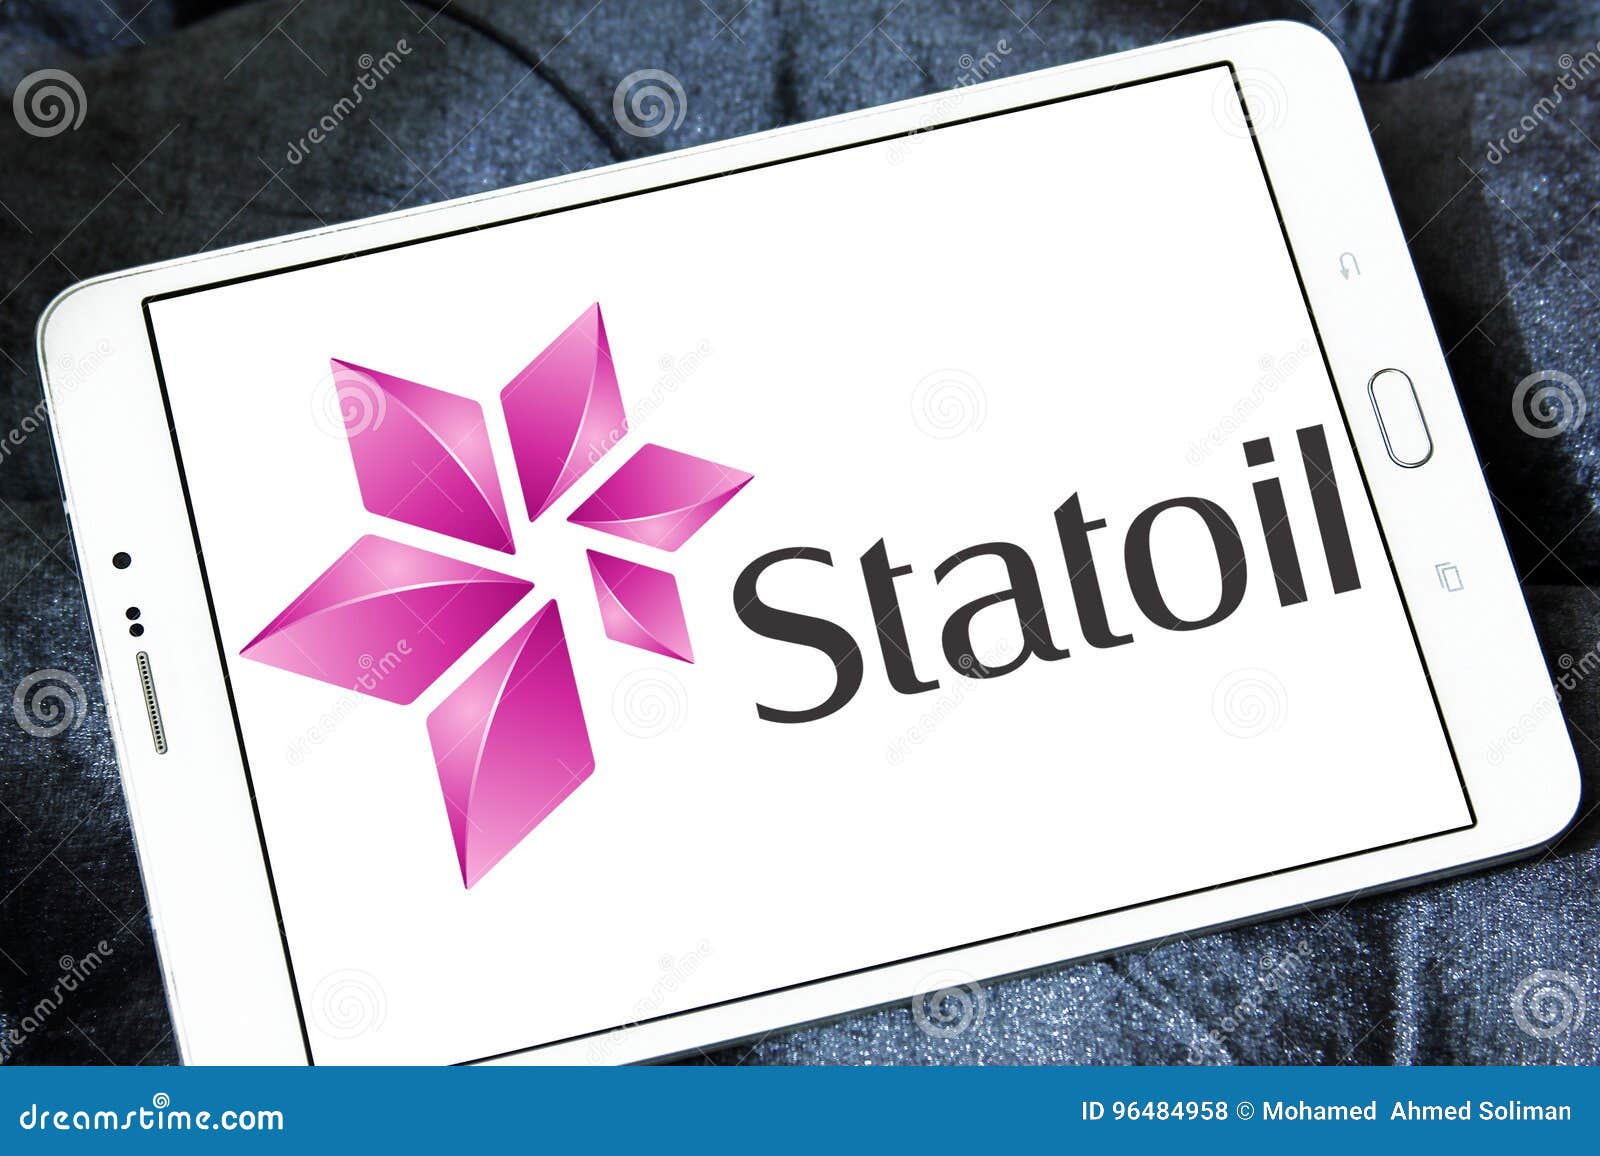 Statoil Logo Editorial Stock Photo Image Of Private 96484958